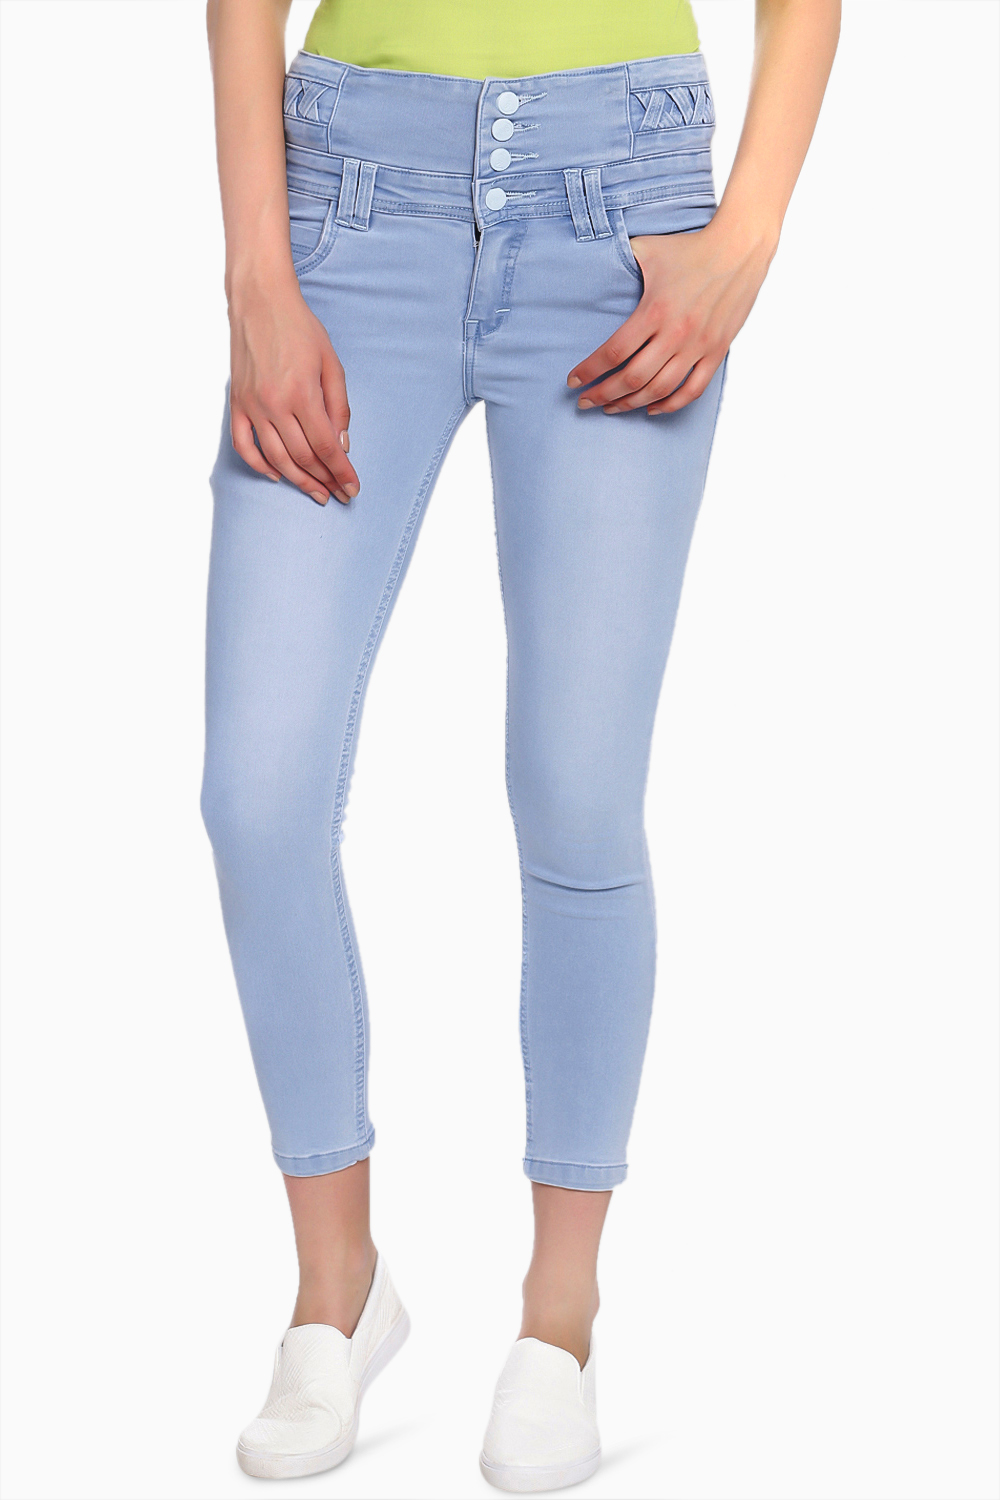 Broadstar Light Blue Denim Jeans - Buy Broadstar Light Blue Denim